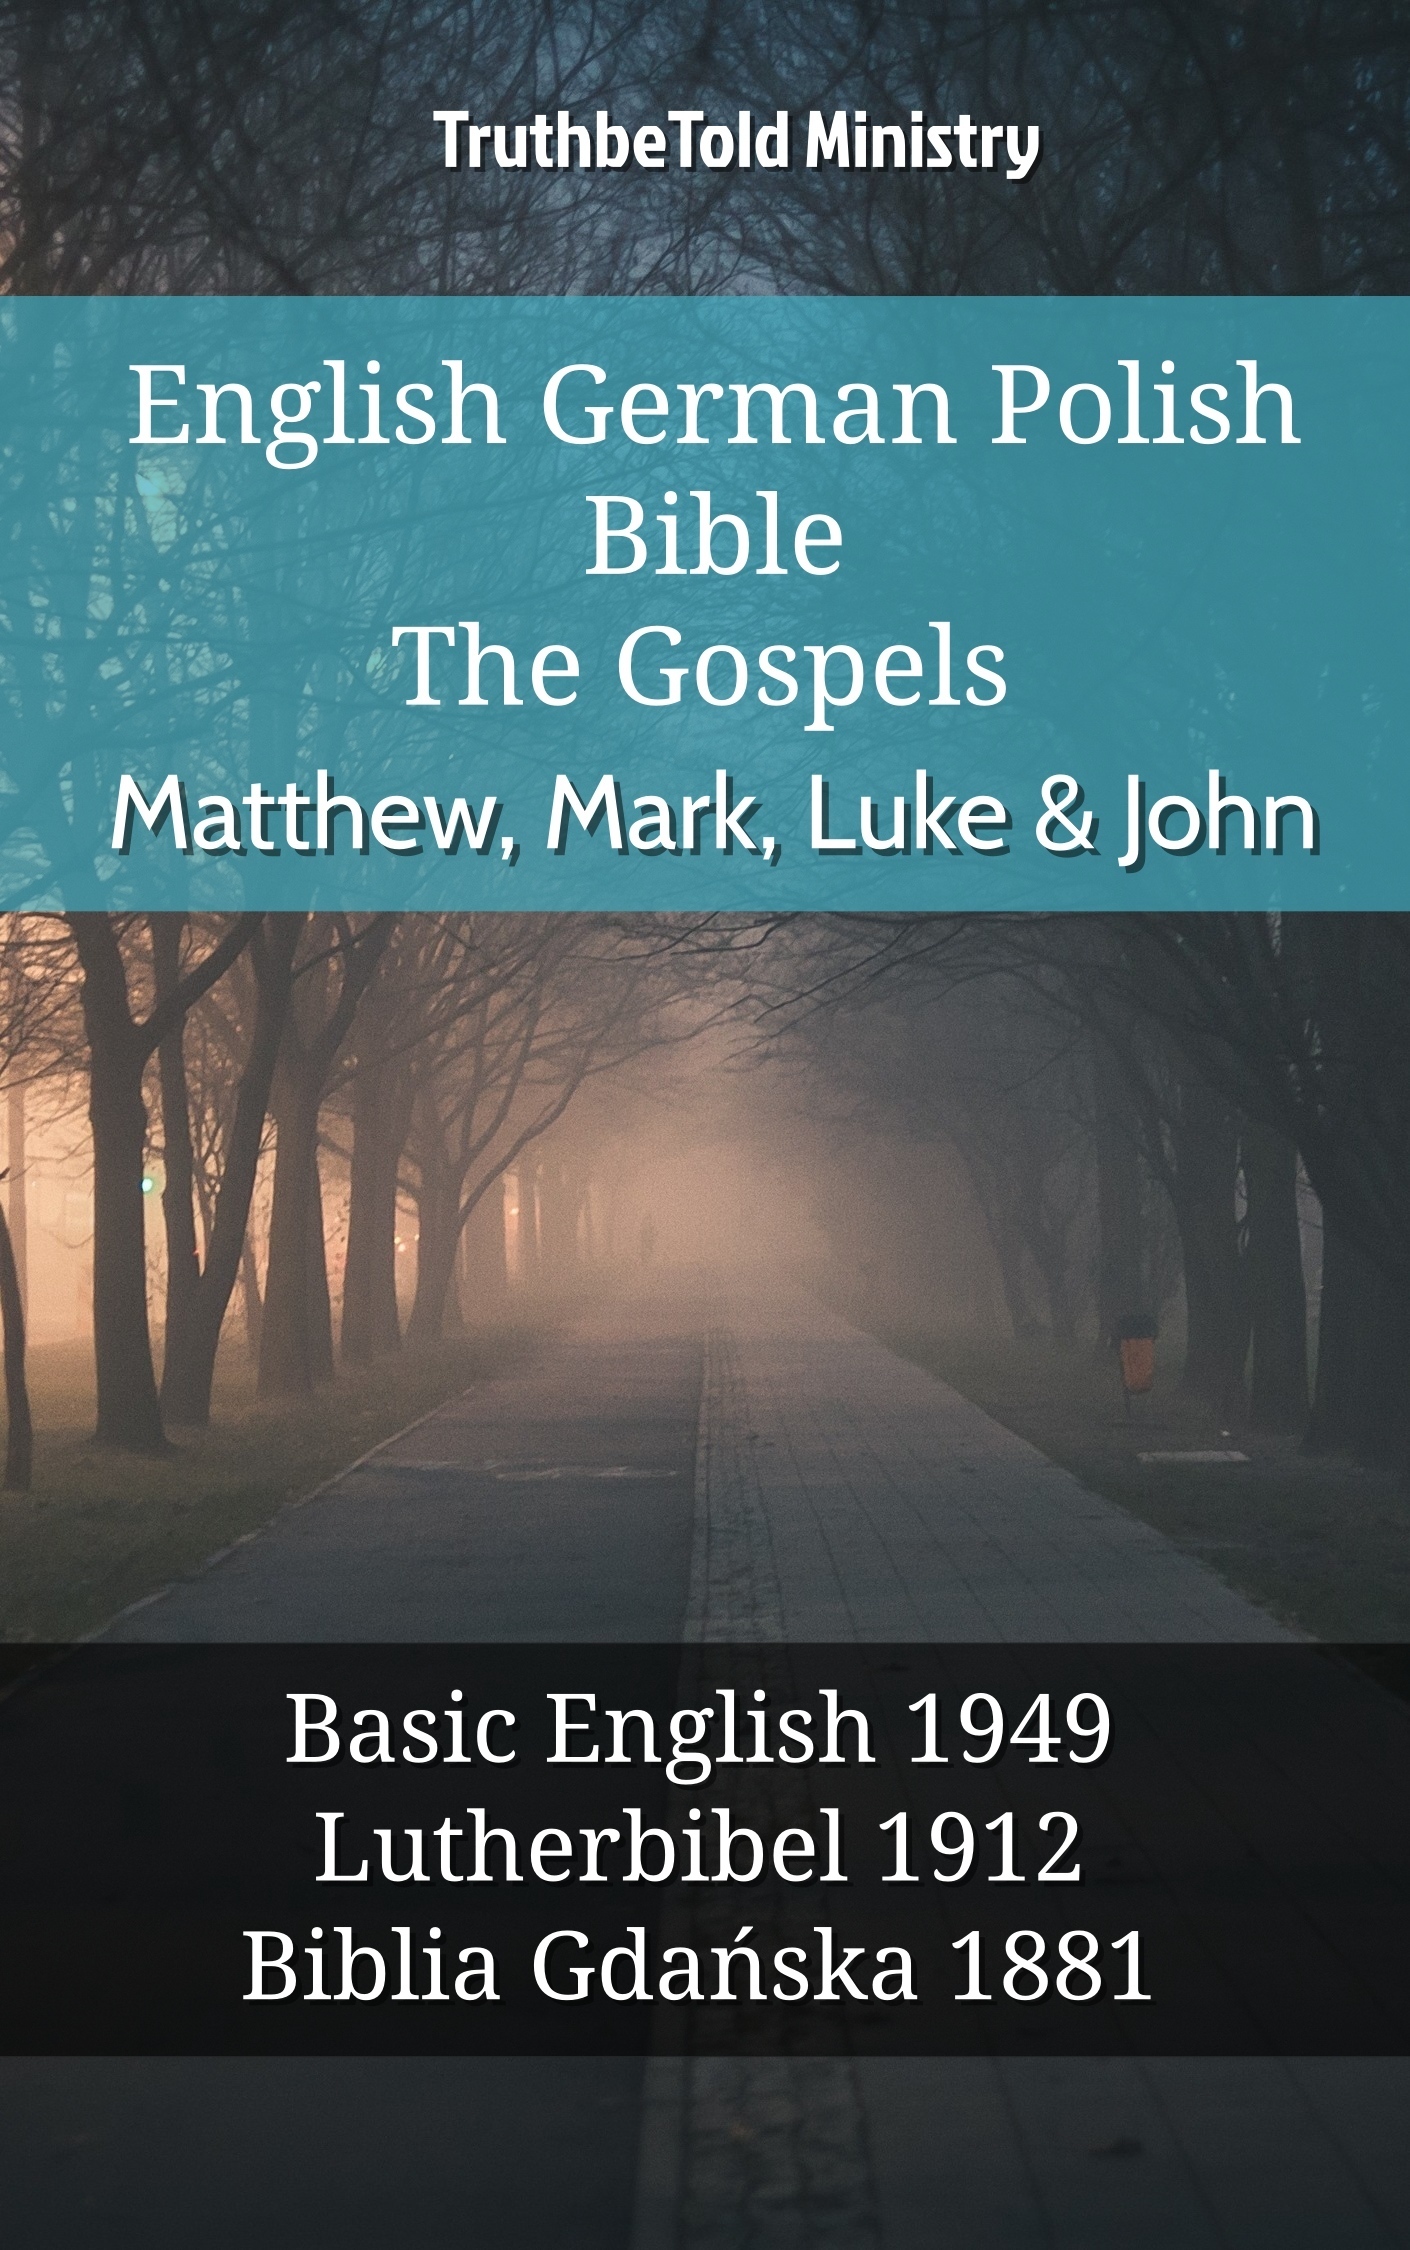 English German Polish Bible - The Gospels - Matthew, Mark, Luke & John